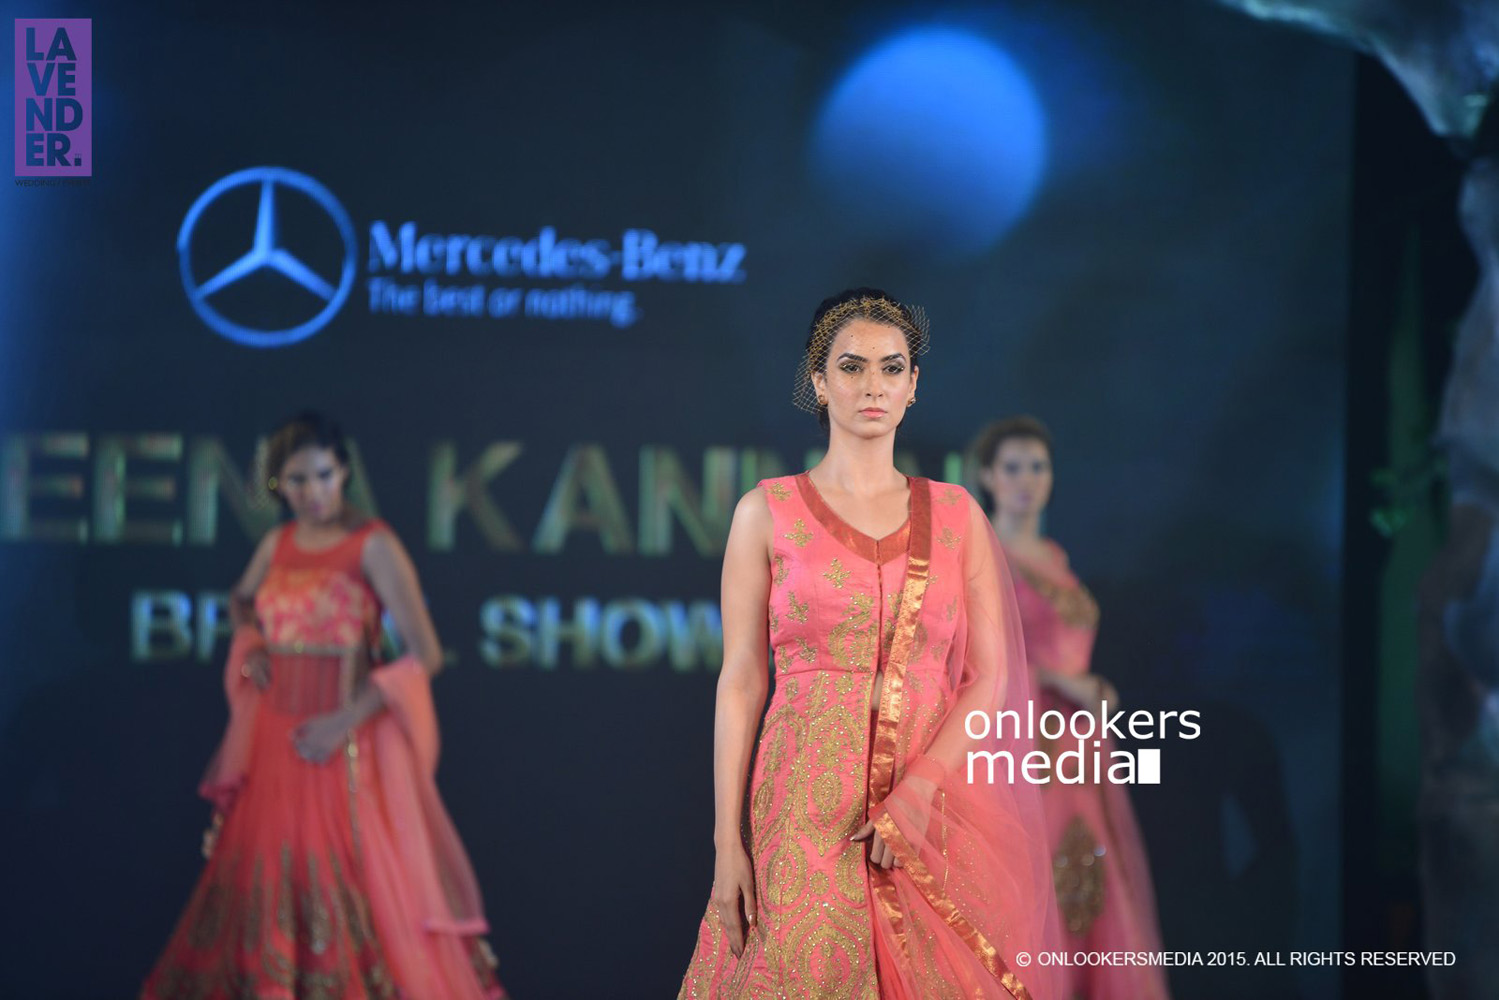 Beena Kannan Bridal Show 2015 Stills-Photos